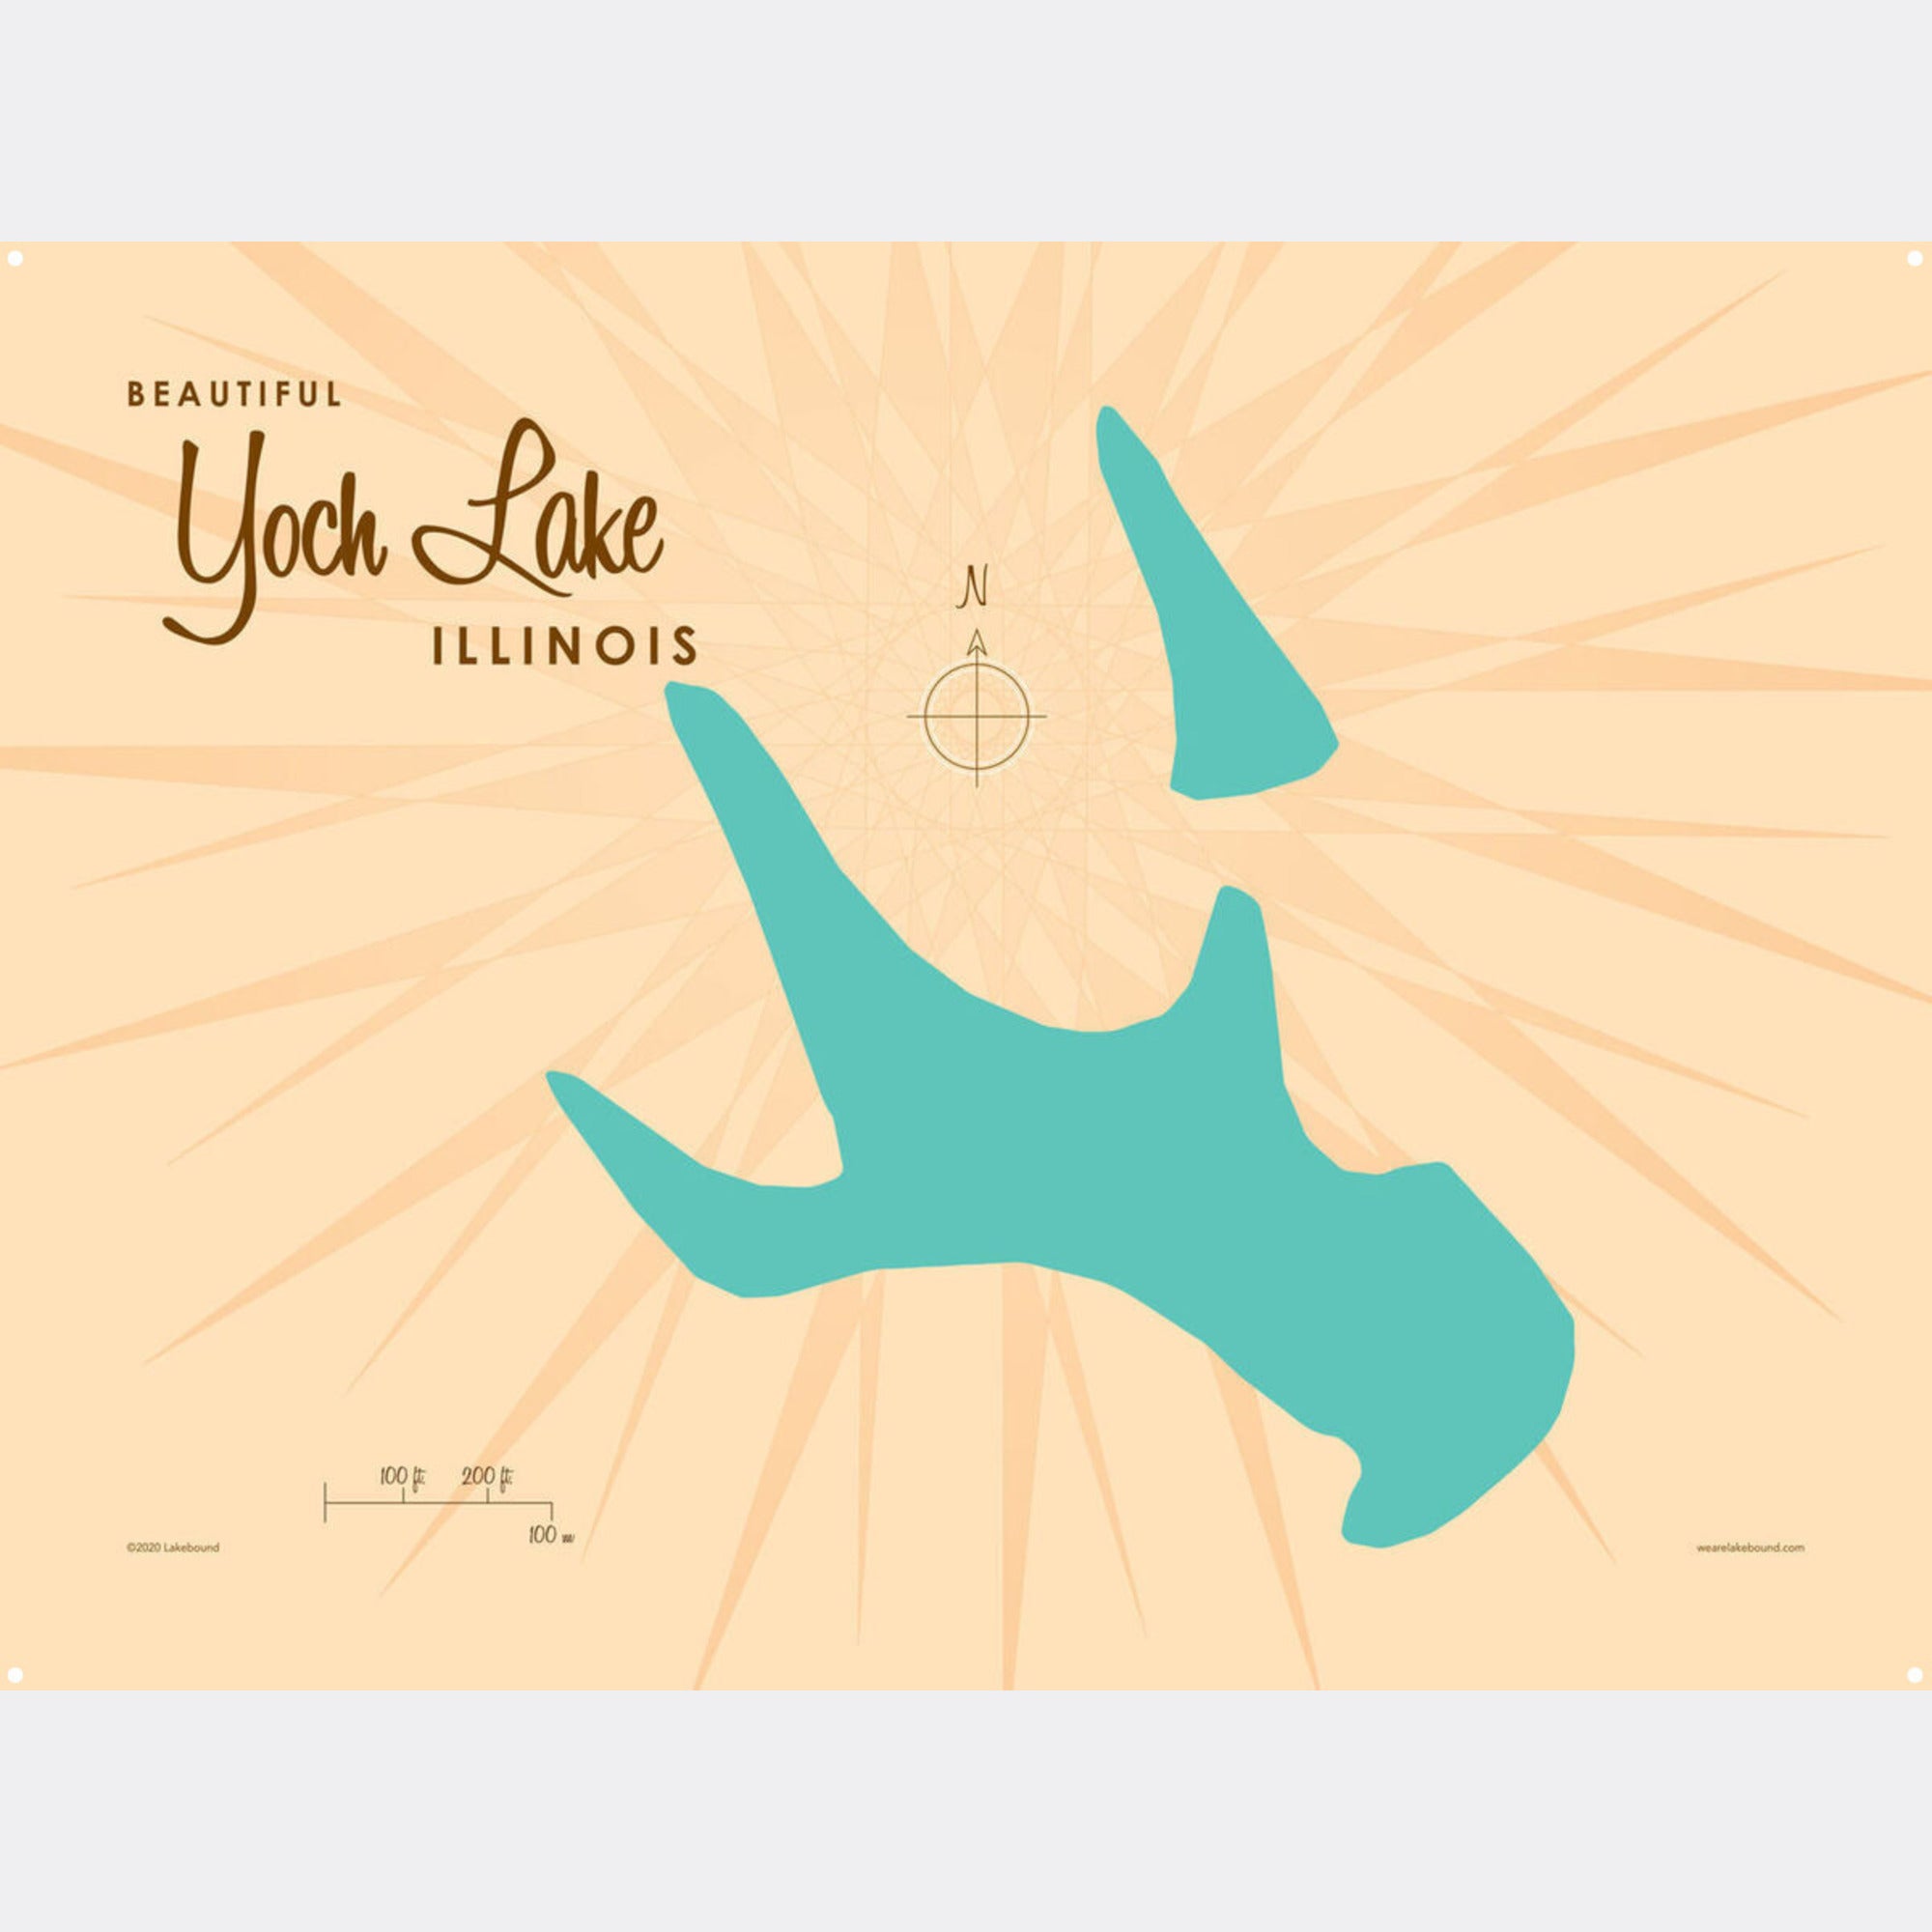 Yoch Lake Illinois, Metal Sign Map Art